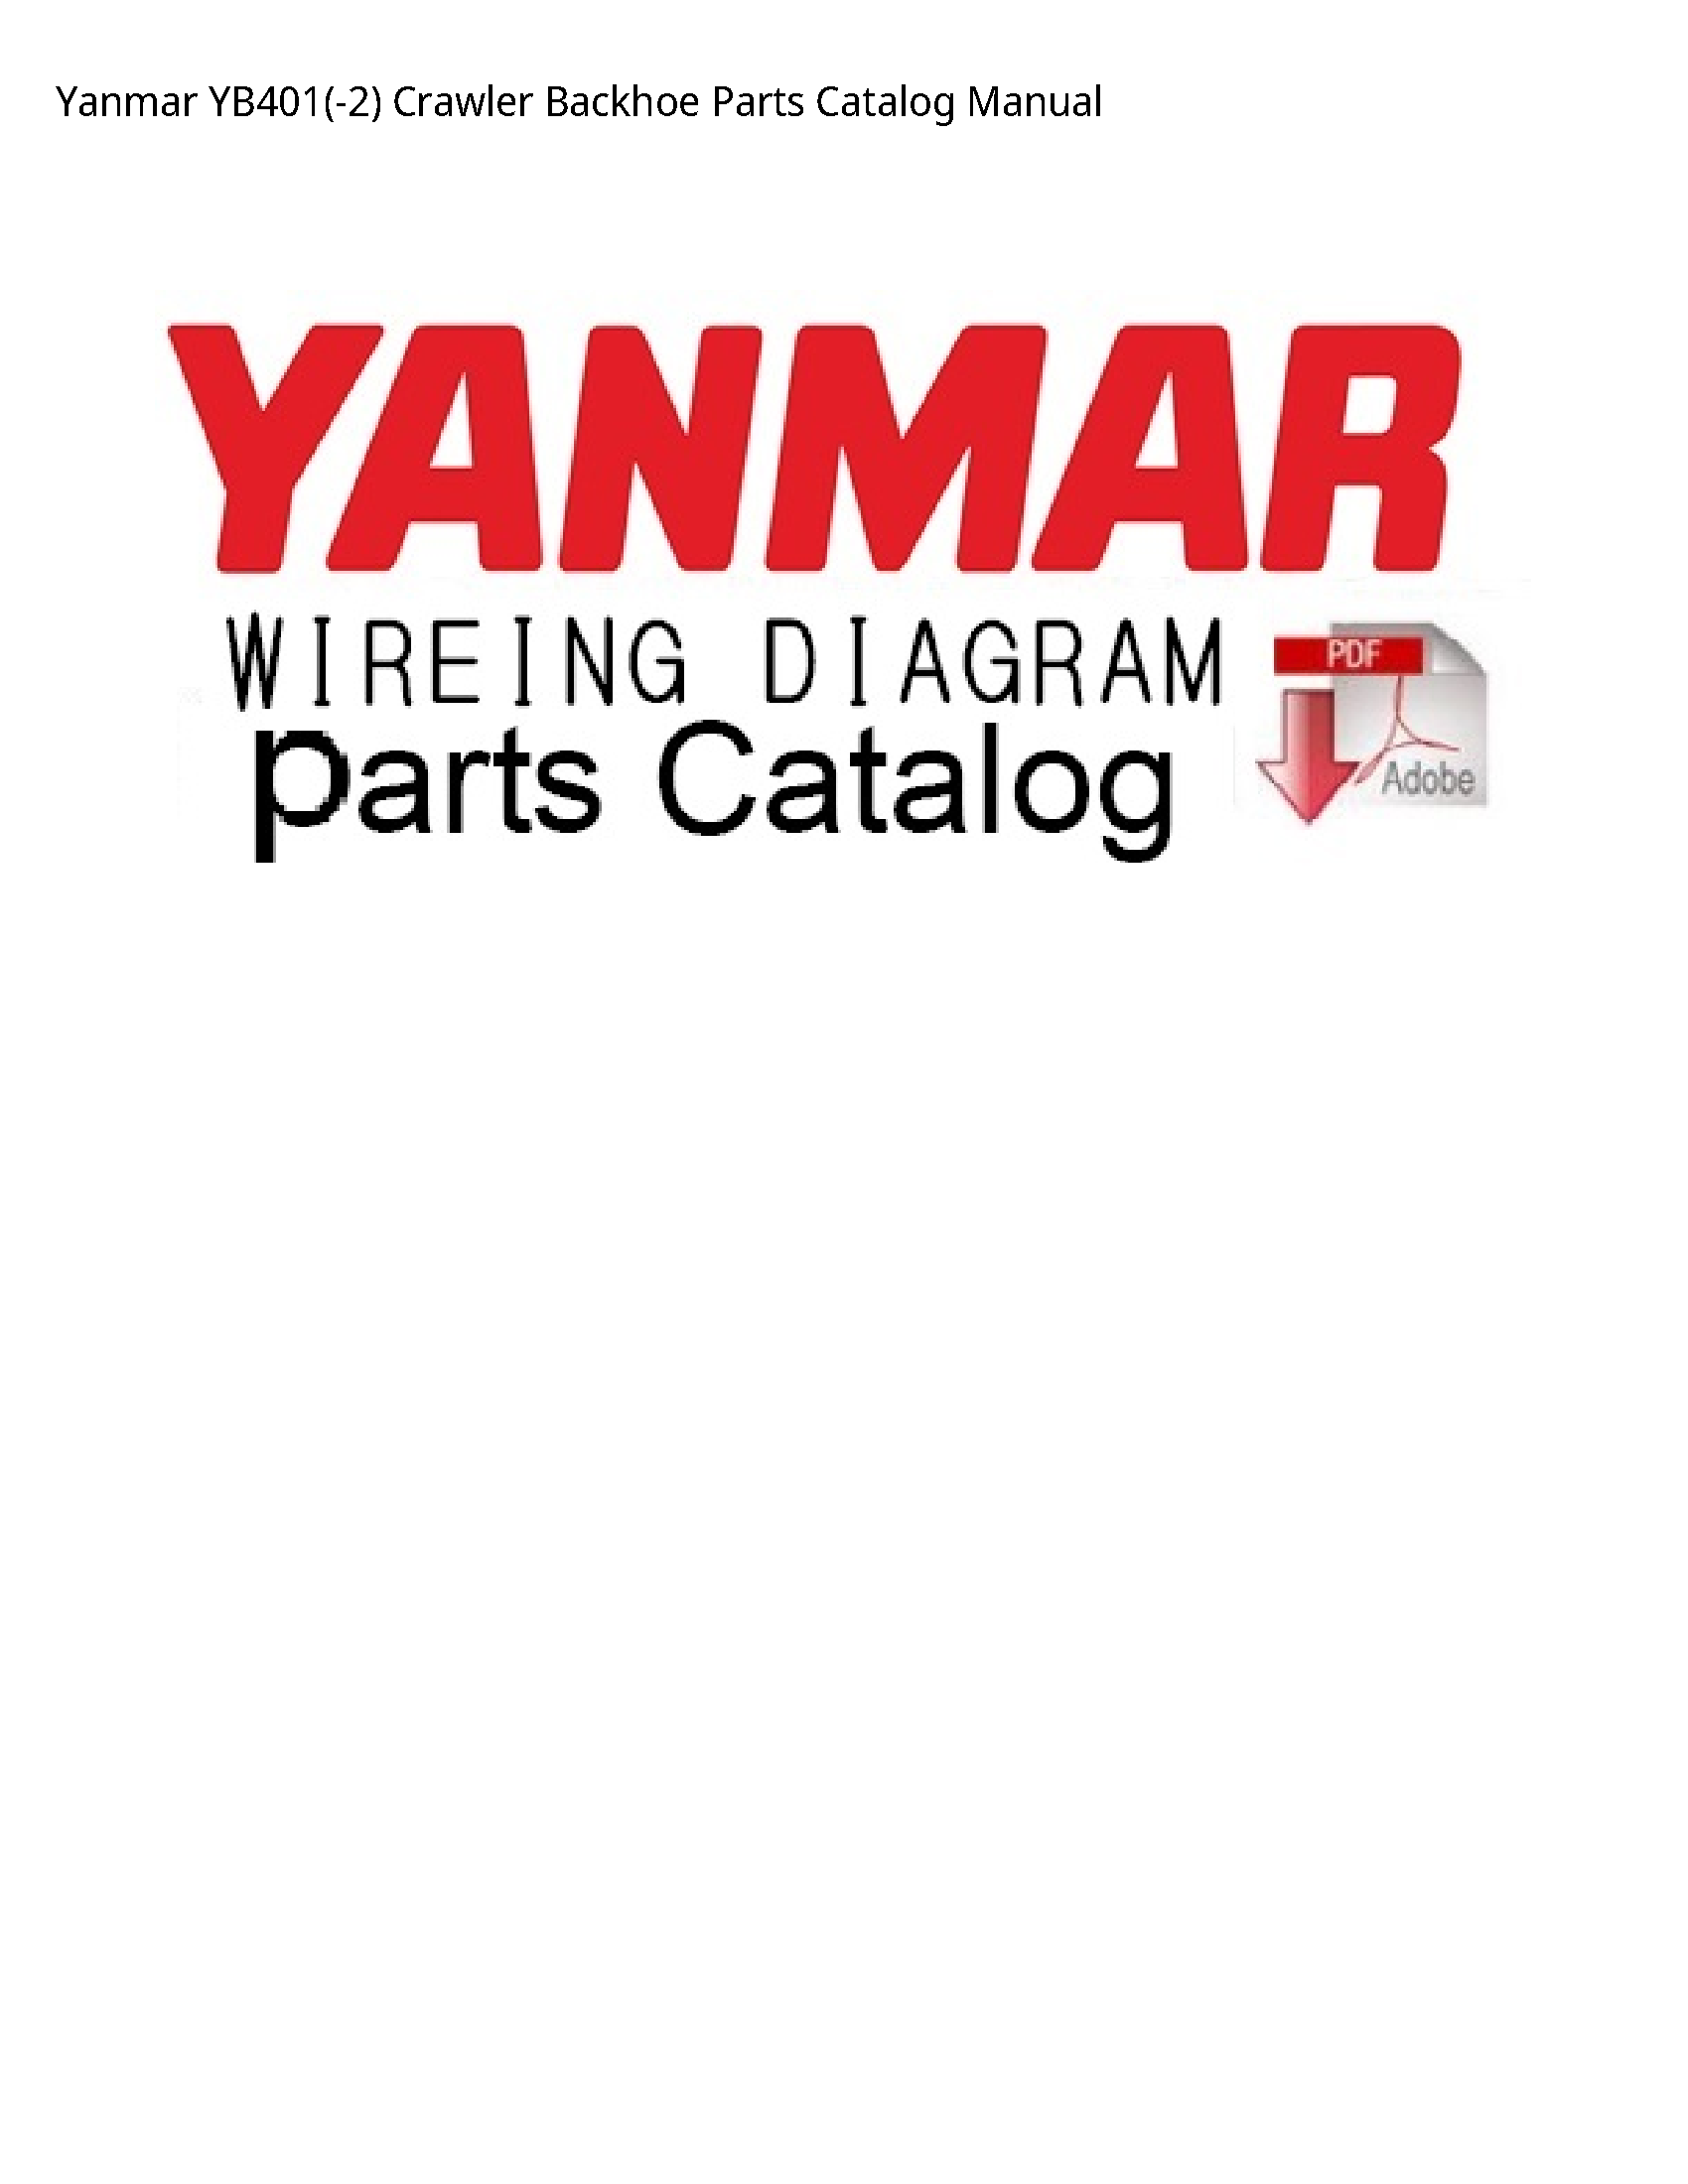 Yanmar YB401(-2) Crawler Backhoe Parts Catalog manual